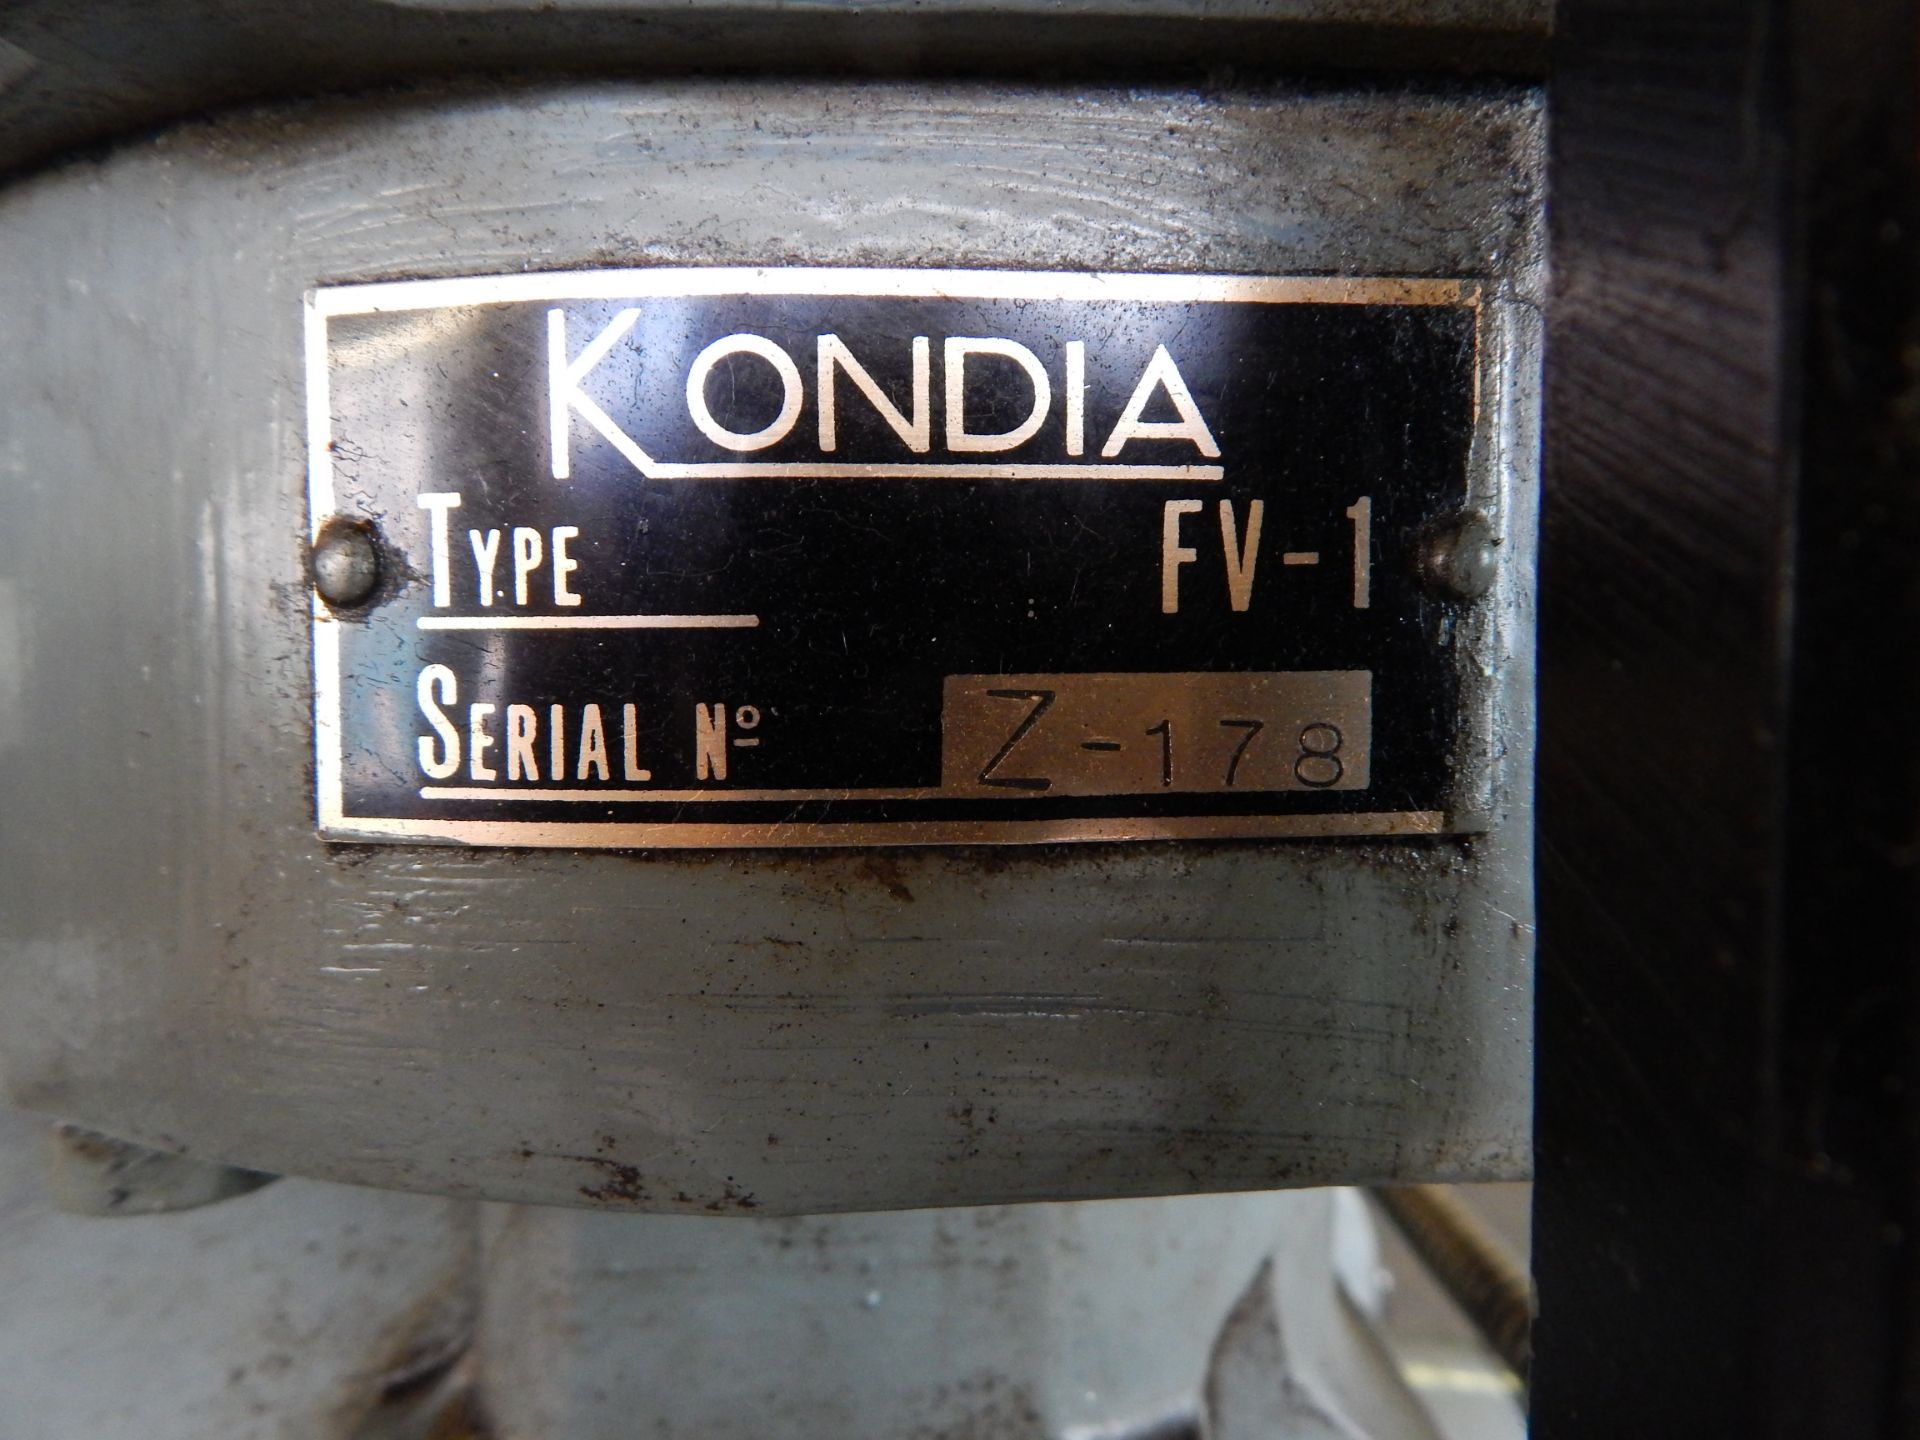 Clausing Kondia/Prototrak CNC Knee Mill, Model FV-1, S/N Z-178, Prototrak MX2 CNC Control, Power - Image 10 of 14